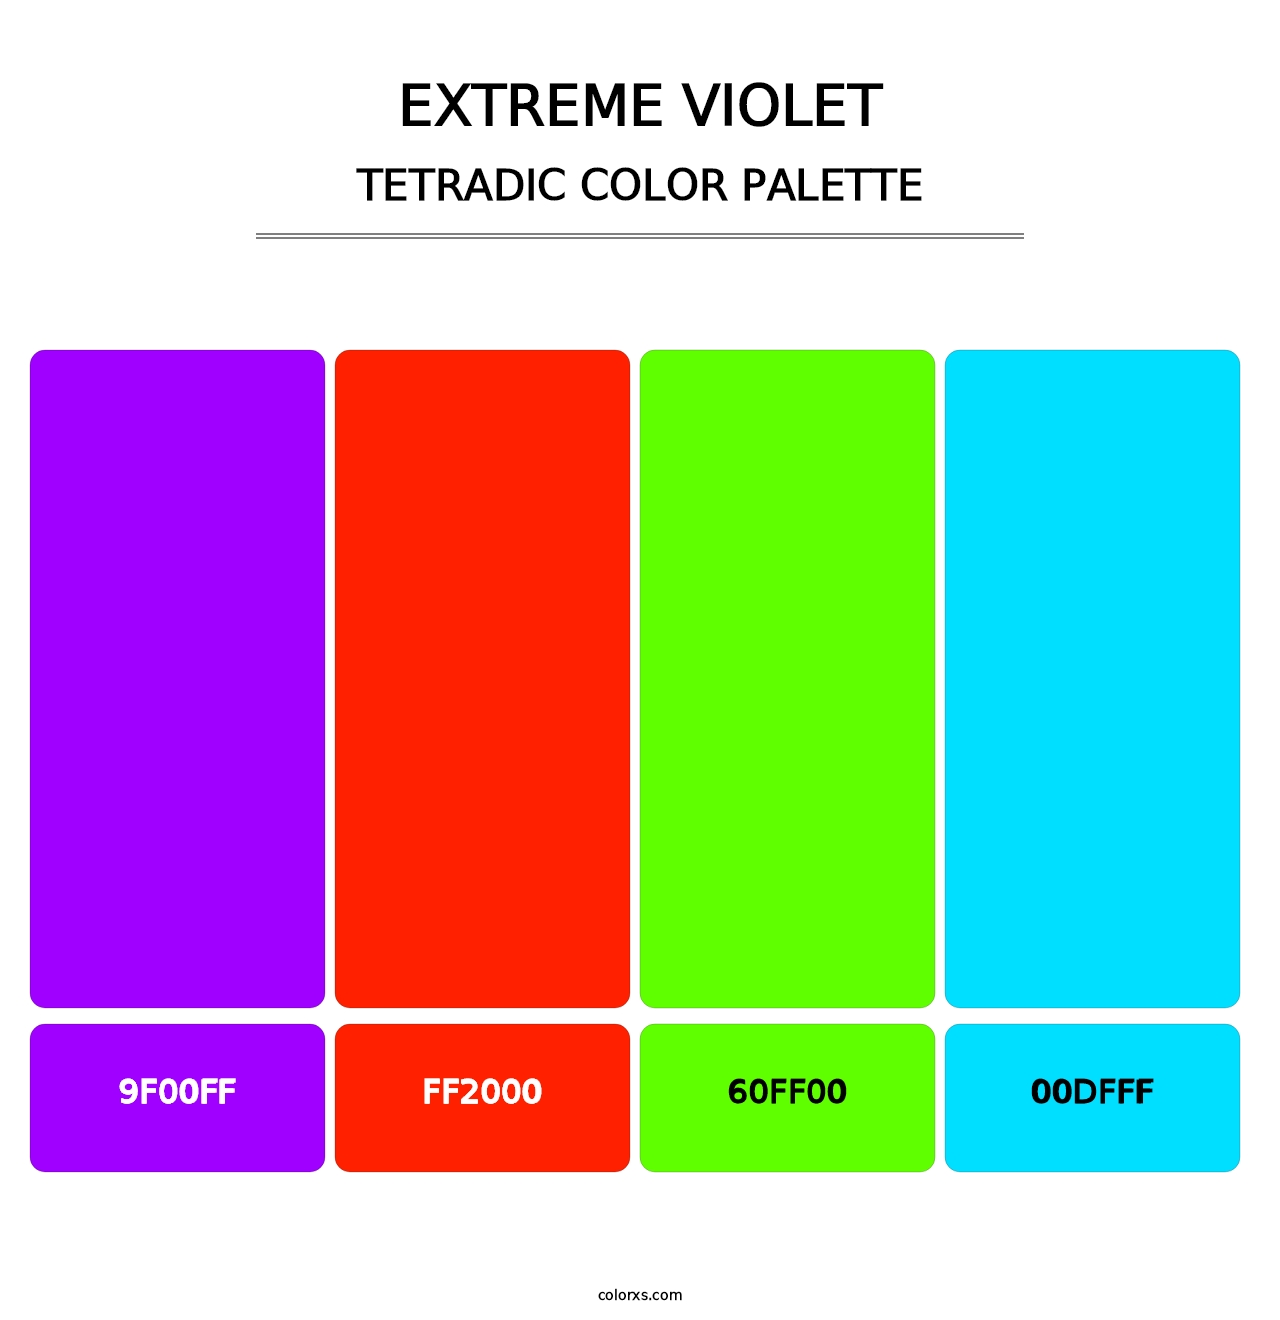 Extreme Violet - Tetradic Color Palette